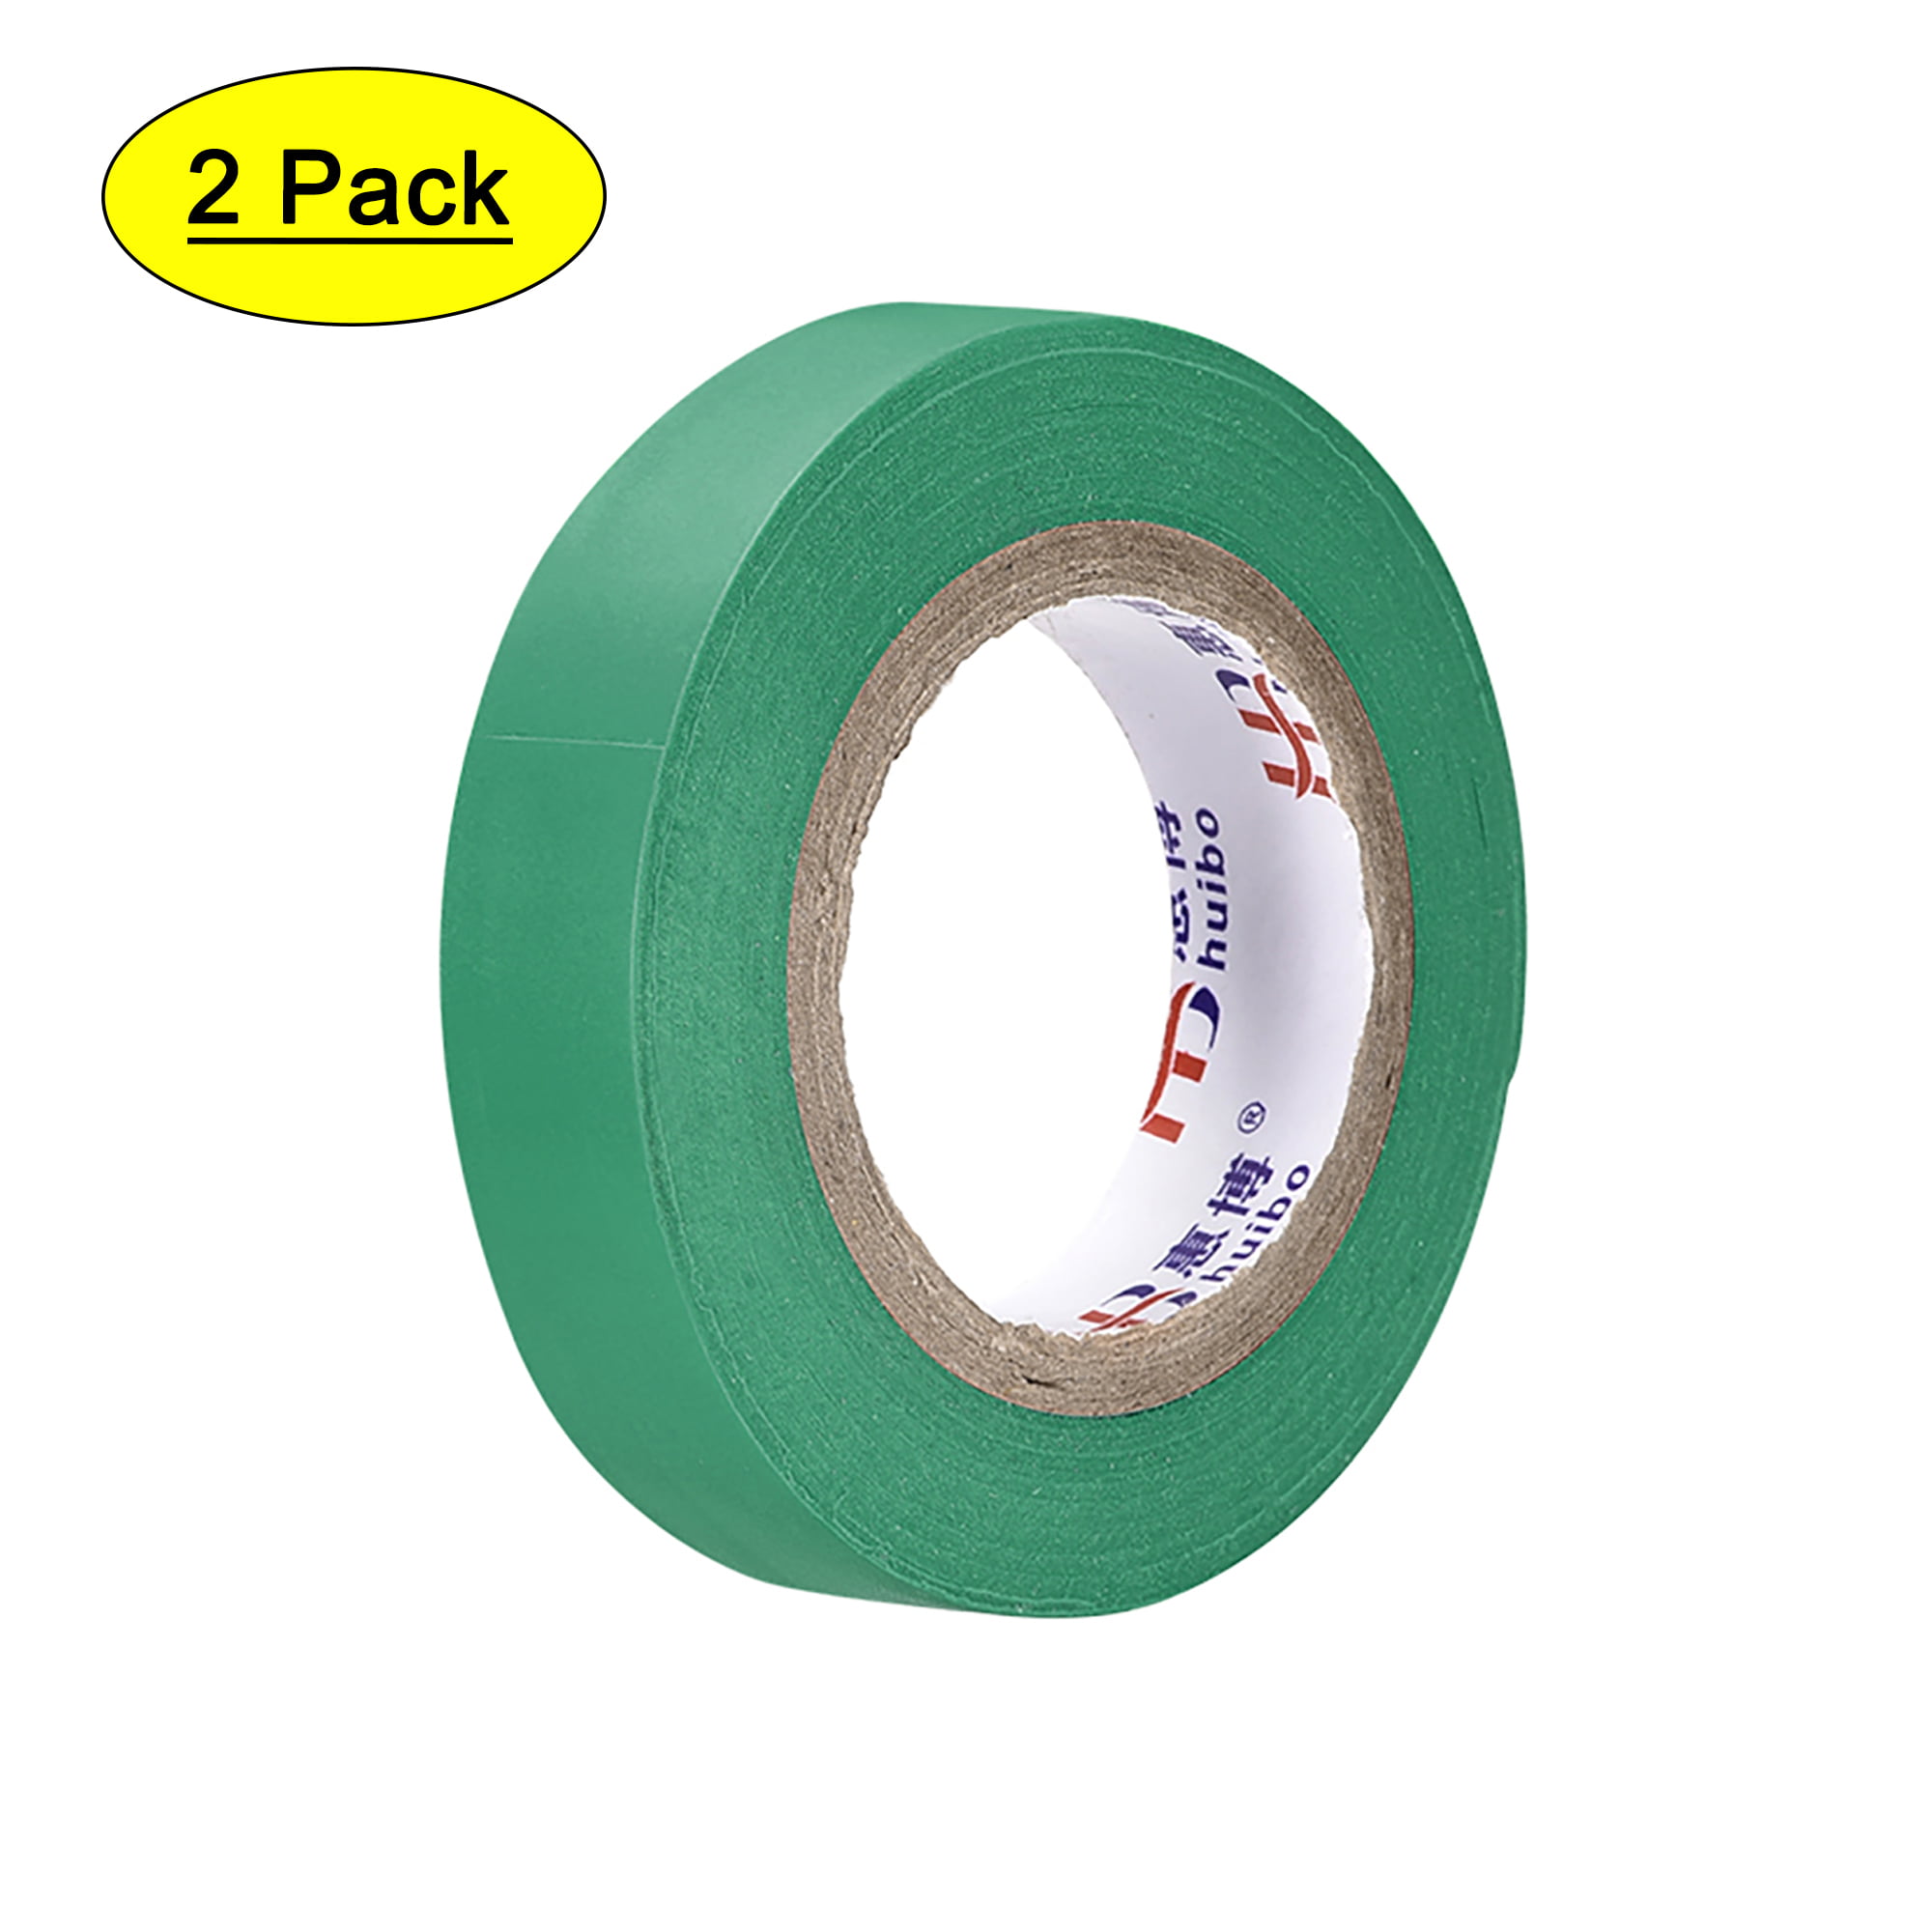 2x 20m Rolls of High Quality PVC Insulation Tape GREEN 